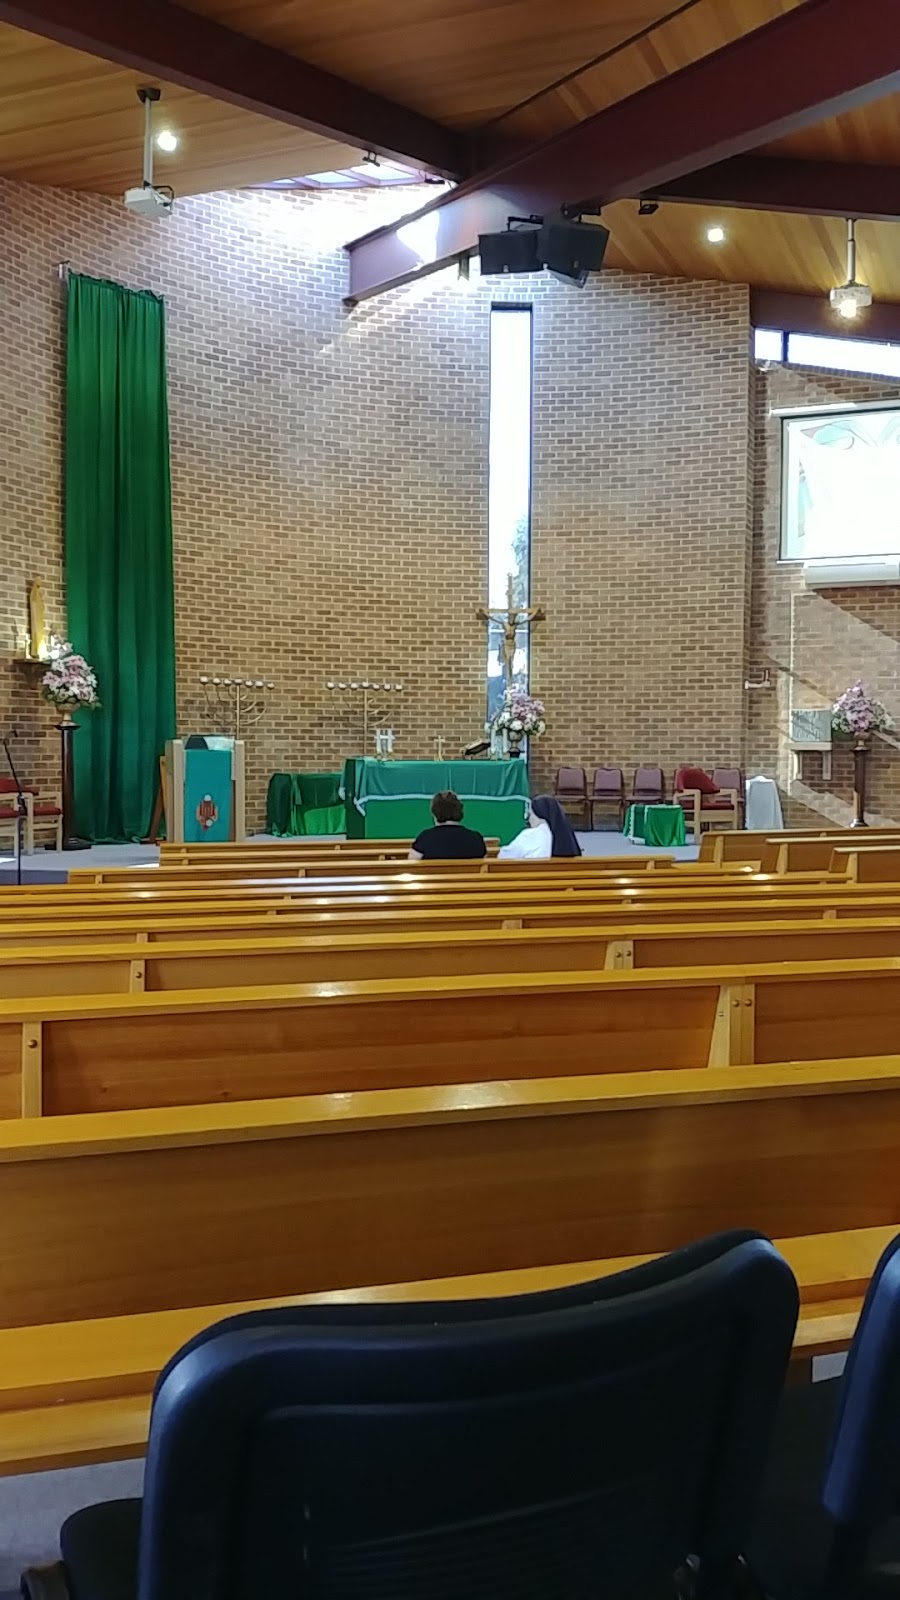 Our Ladys Parish | church | 171 Craigieburn Rd, Craigieburn VIC 3064, Australia | 0394128490 OR +61 3 9412 8490